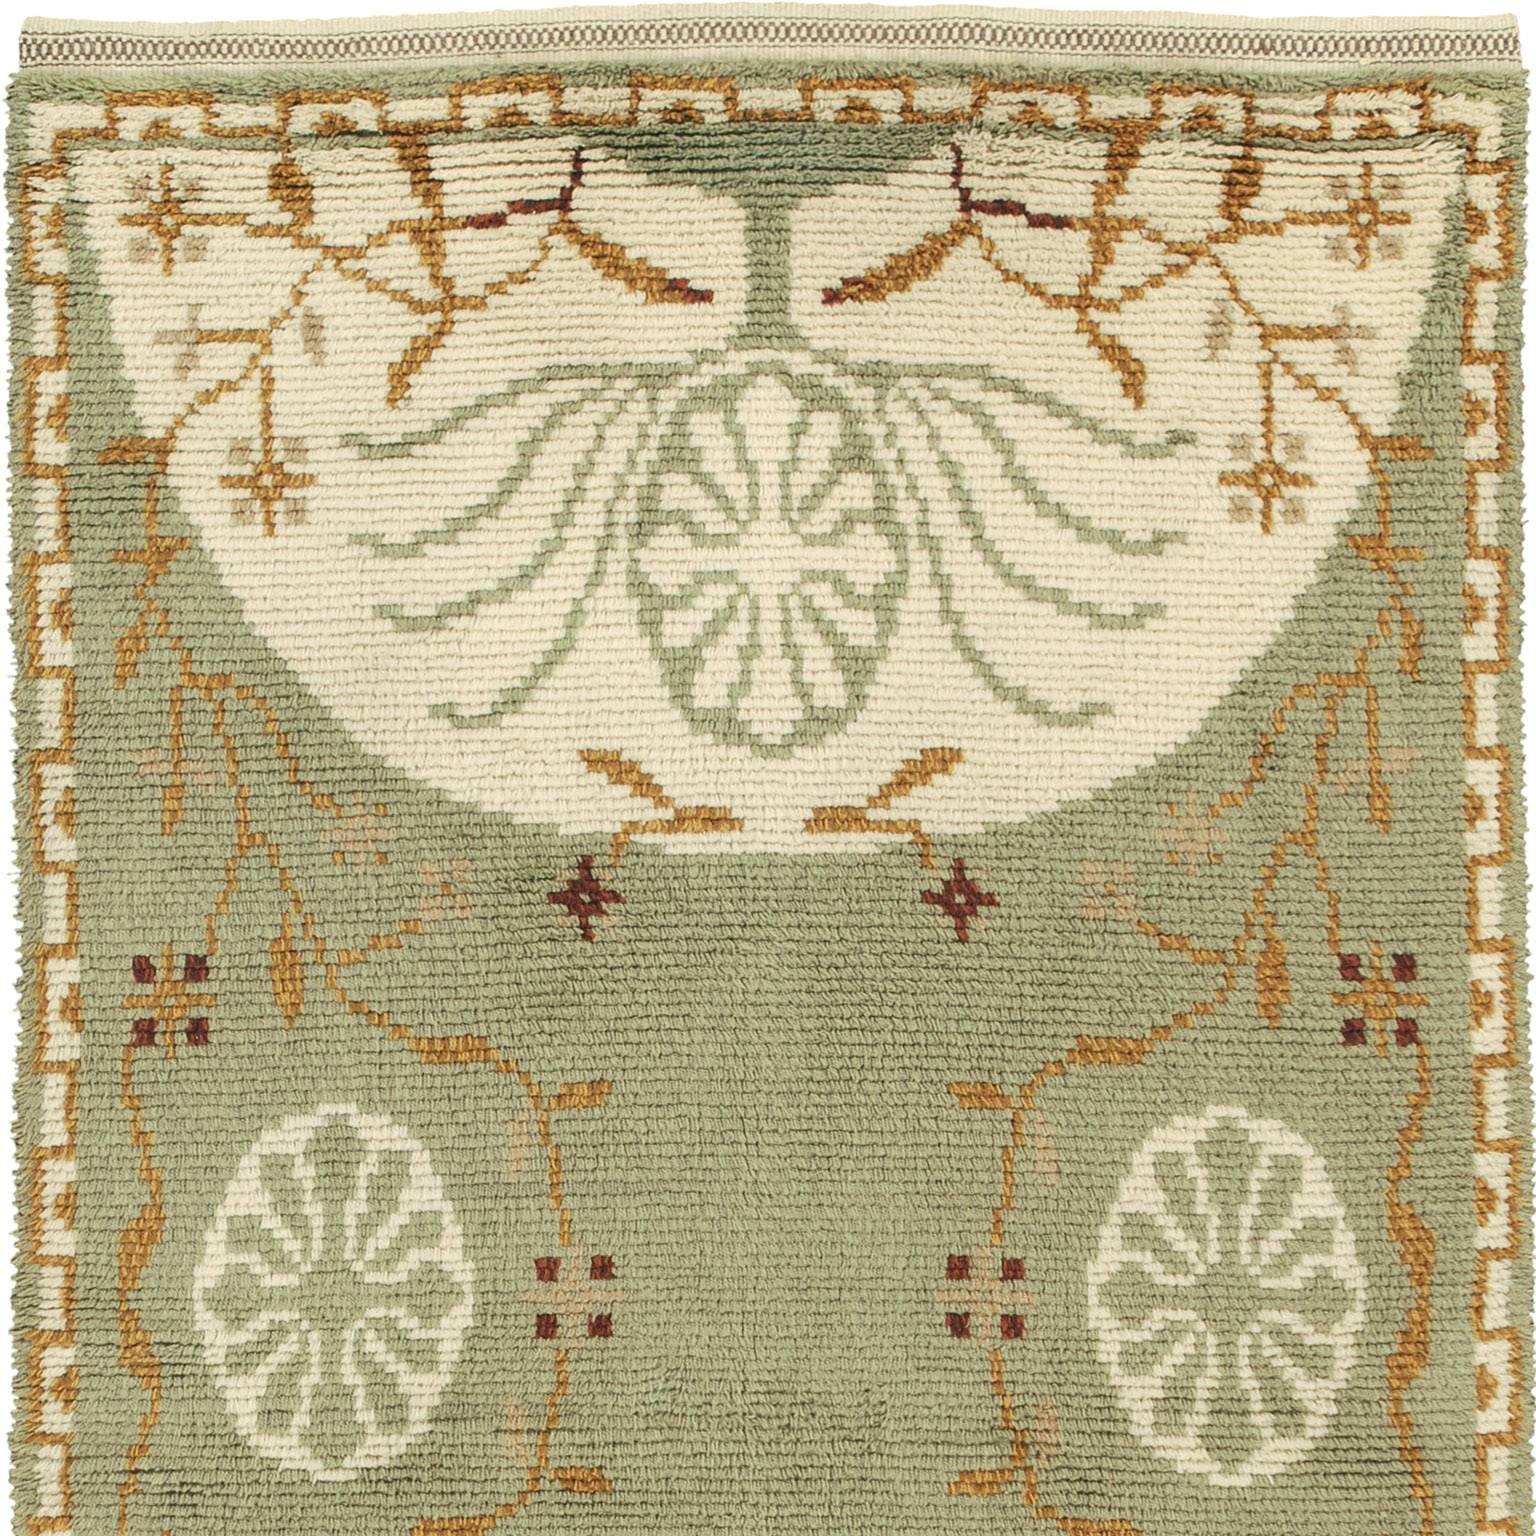 20th Century Swedish Rya Carpet
Swedish Rya technique.